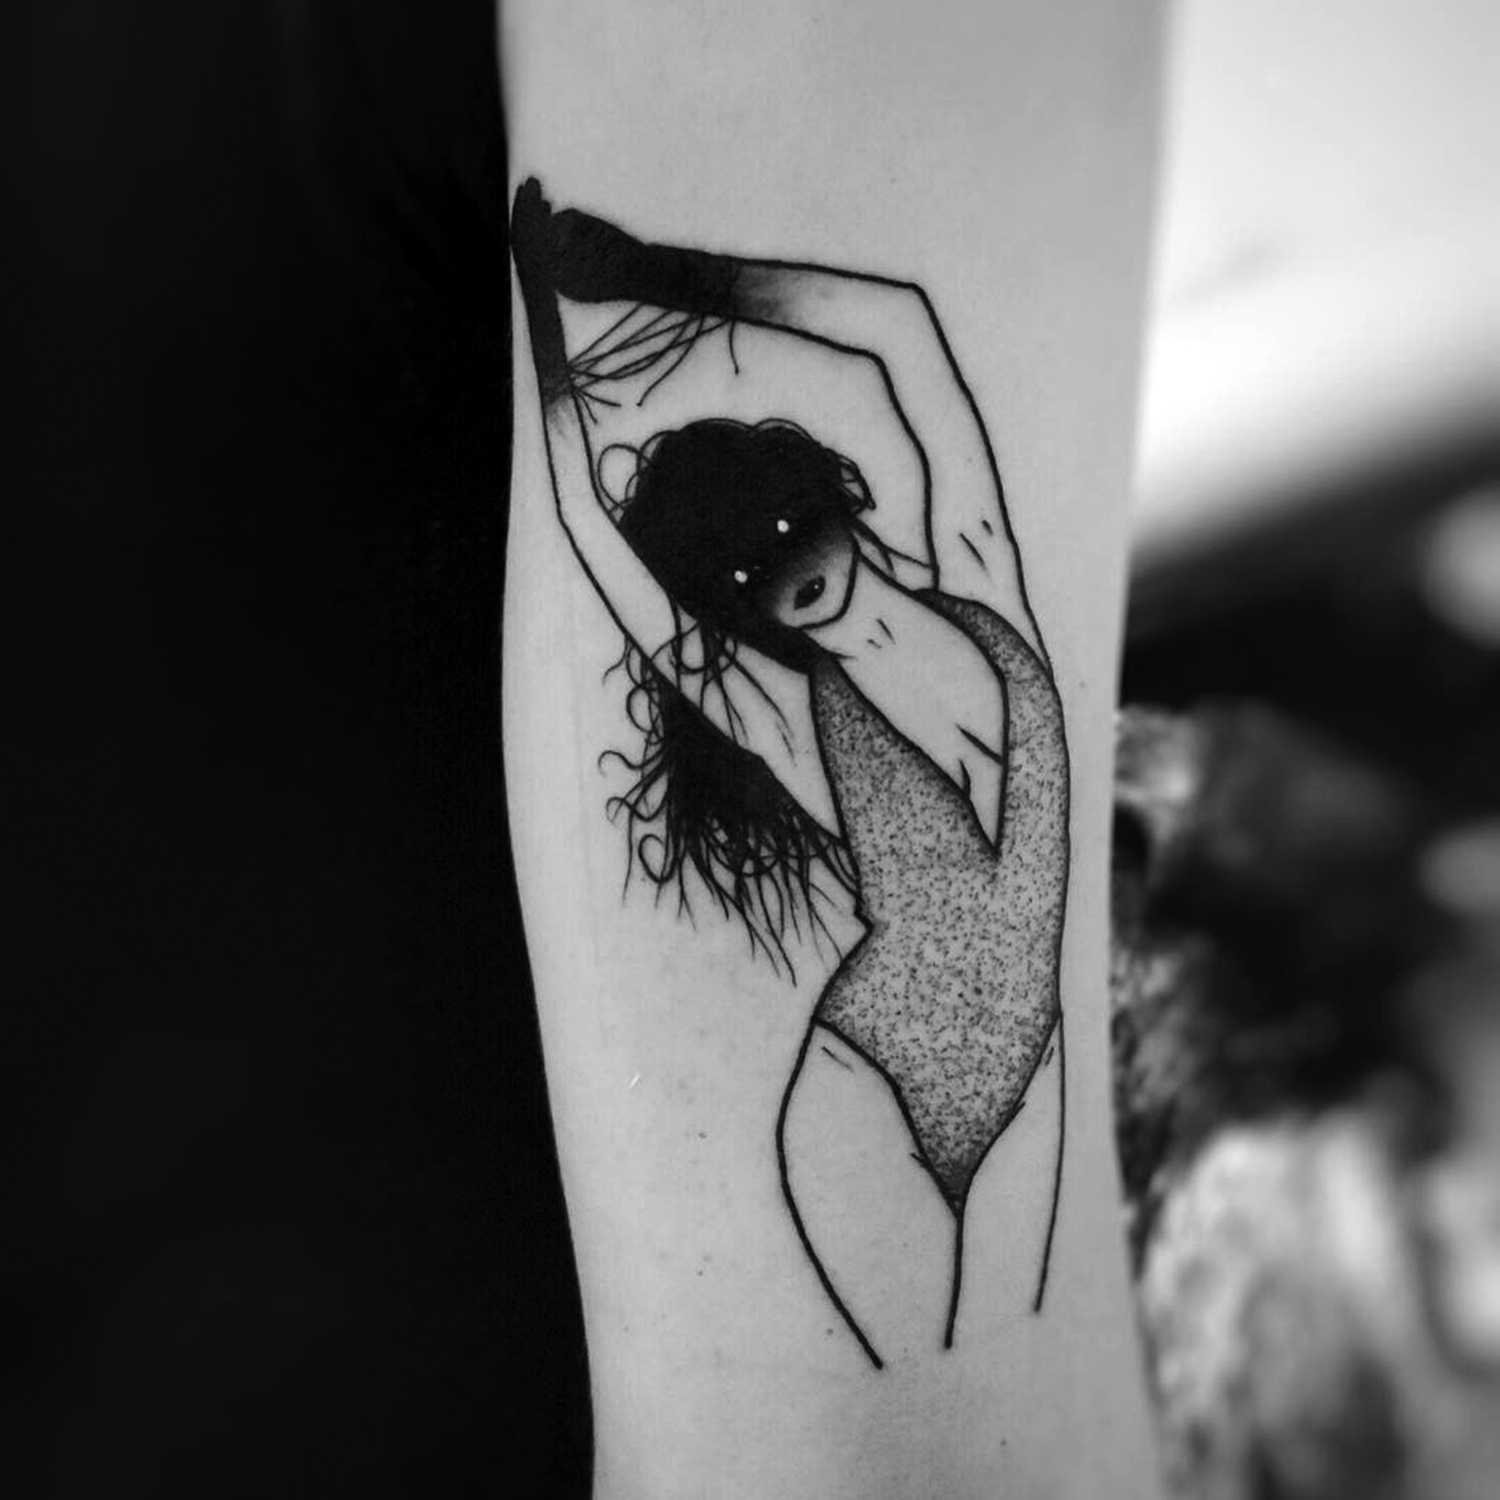 Sewp tattoo - dark bathing suit girl